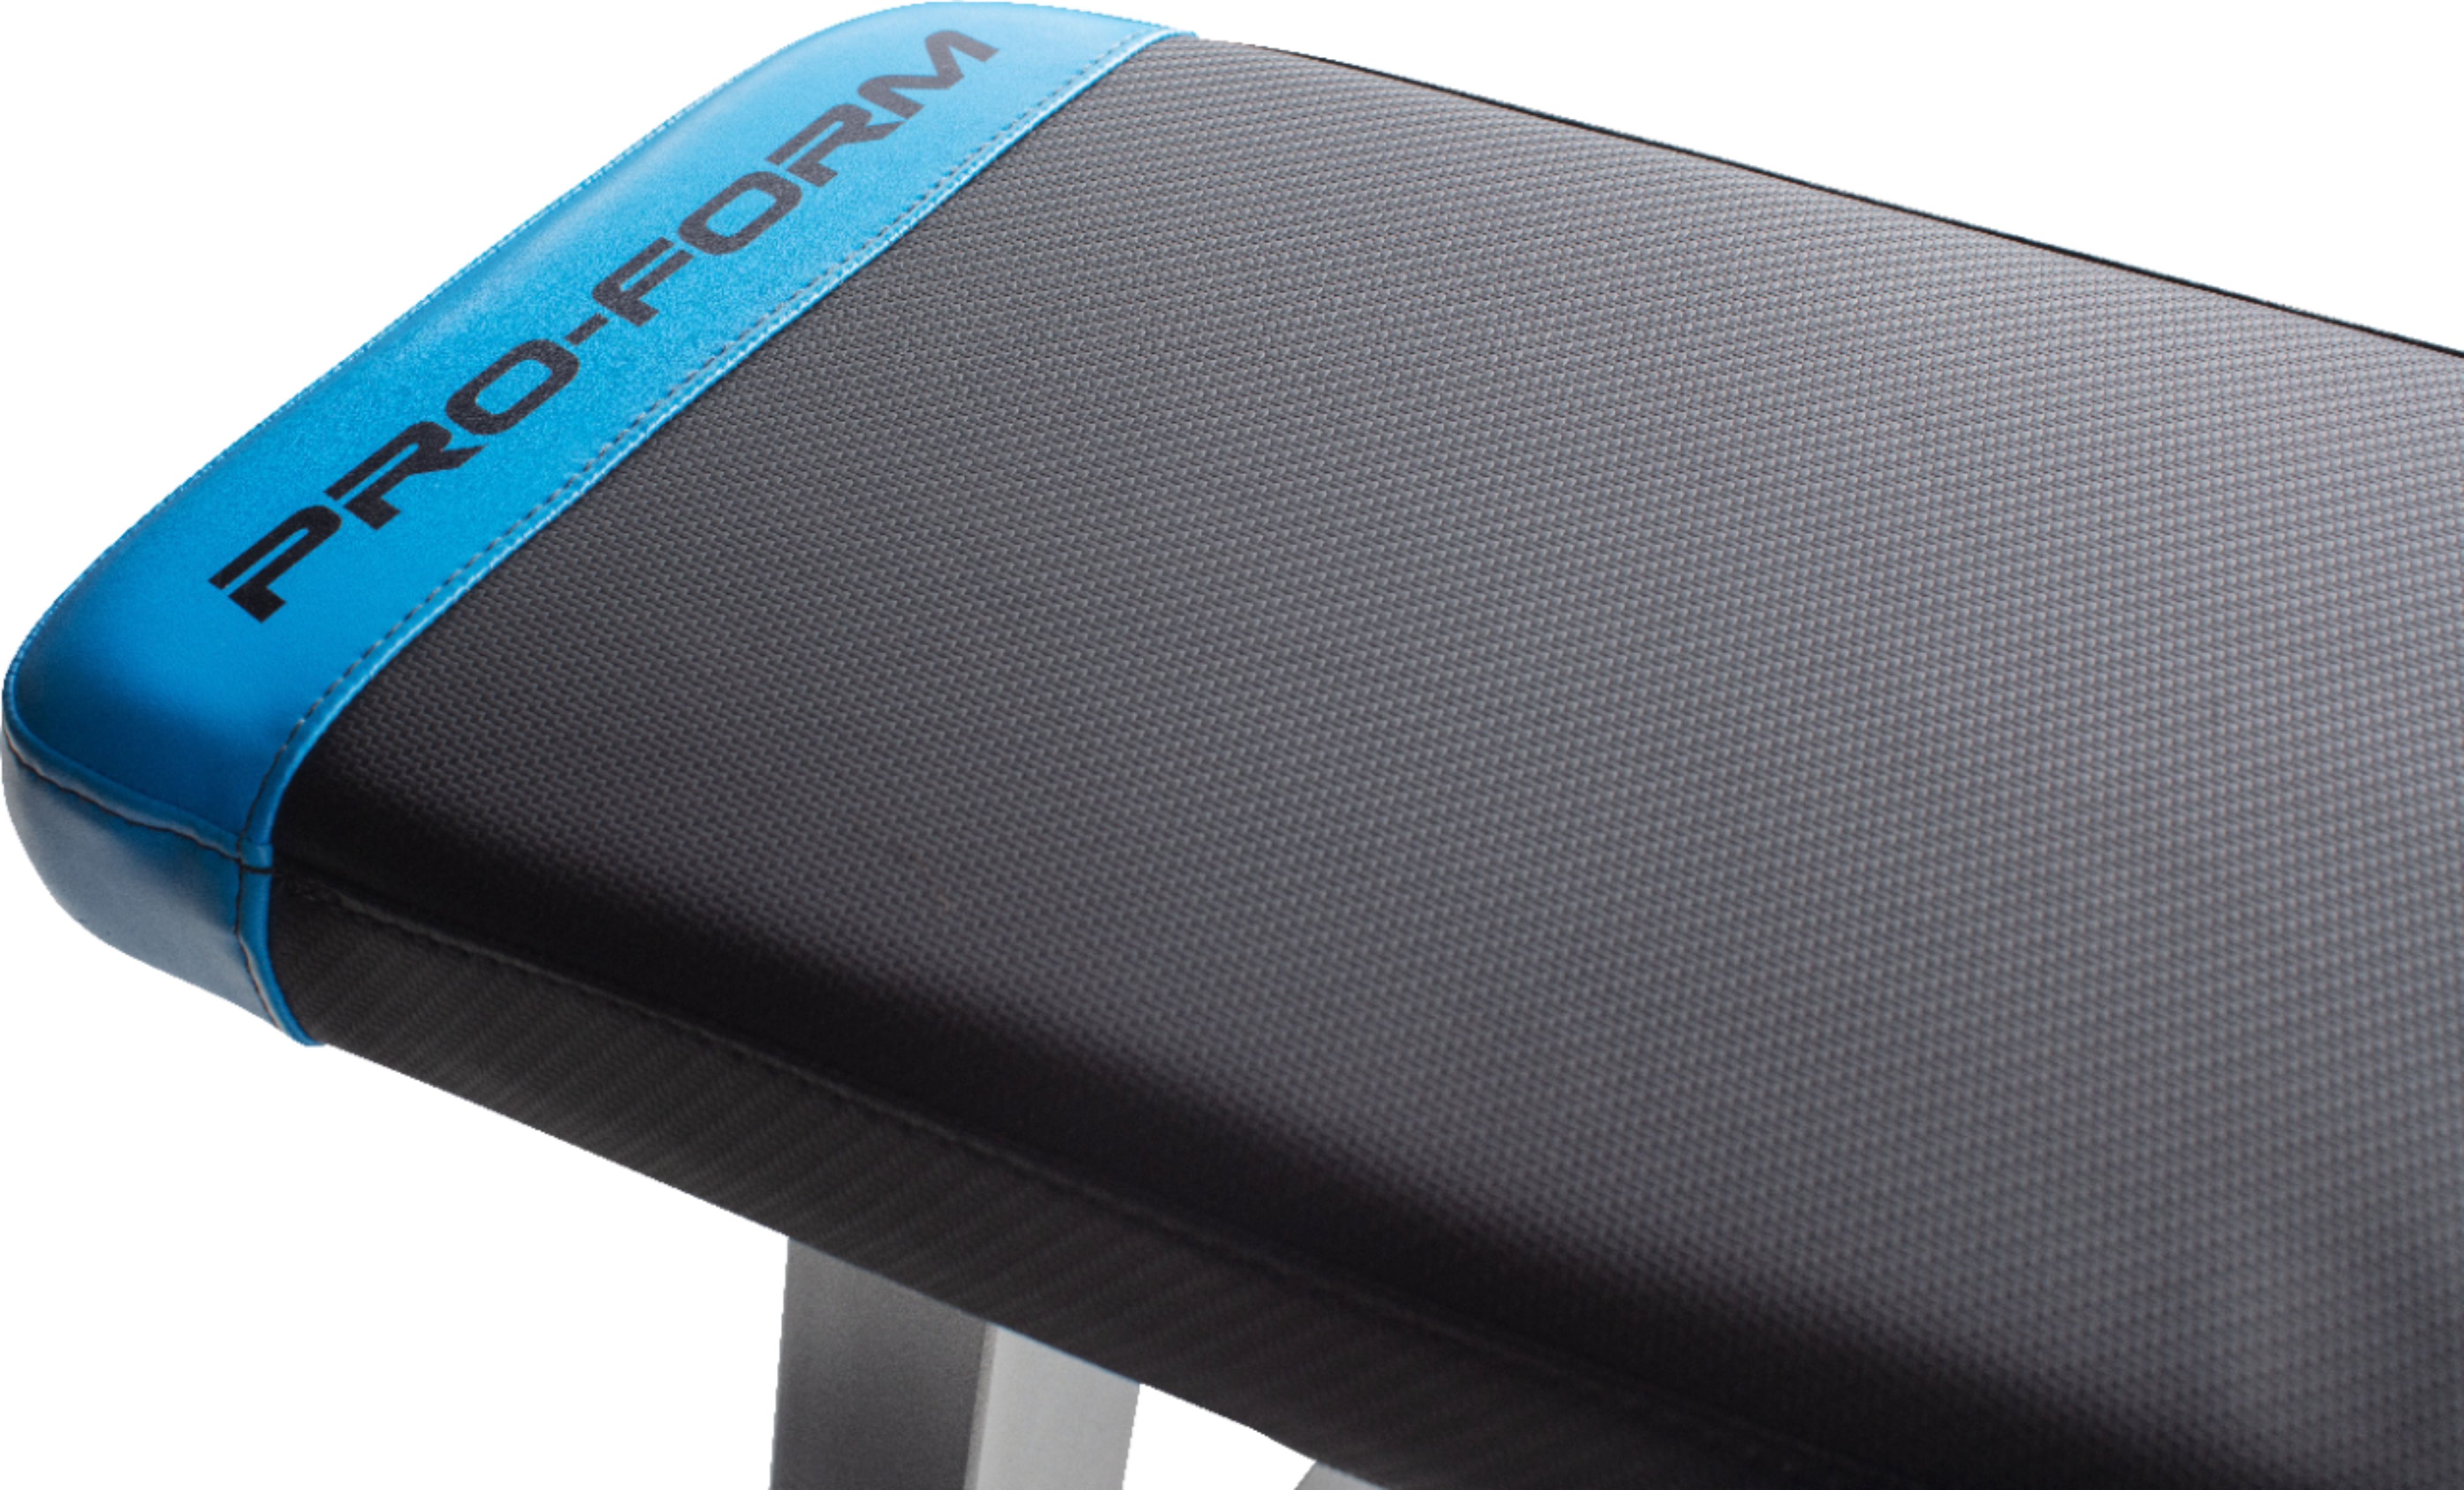 ProForm Carbon Strength Flat Bench Black PFBE09620 - Best Buy